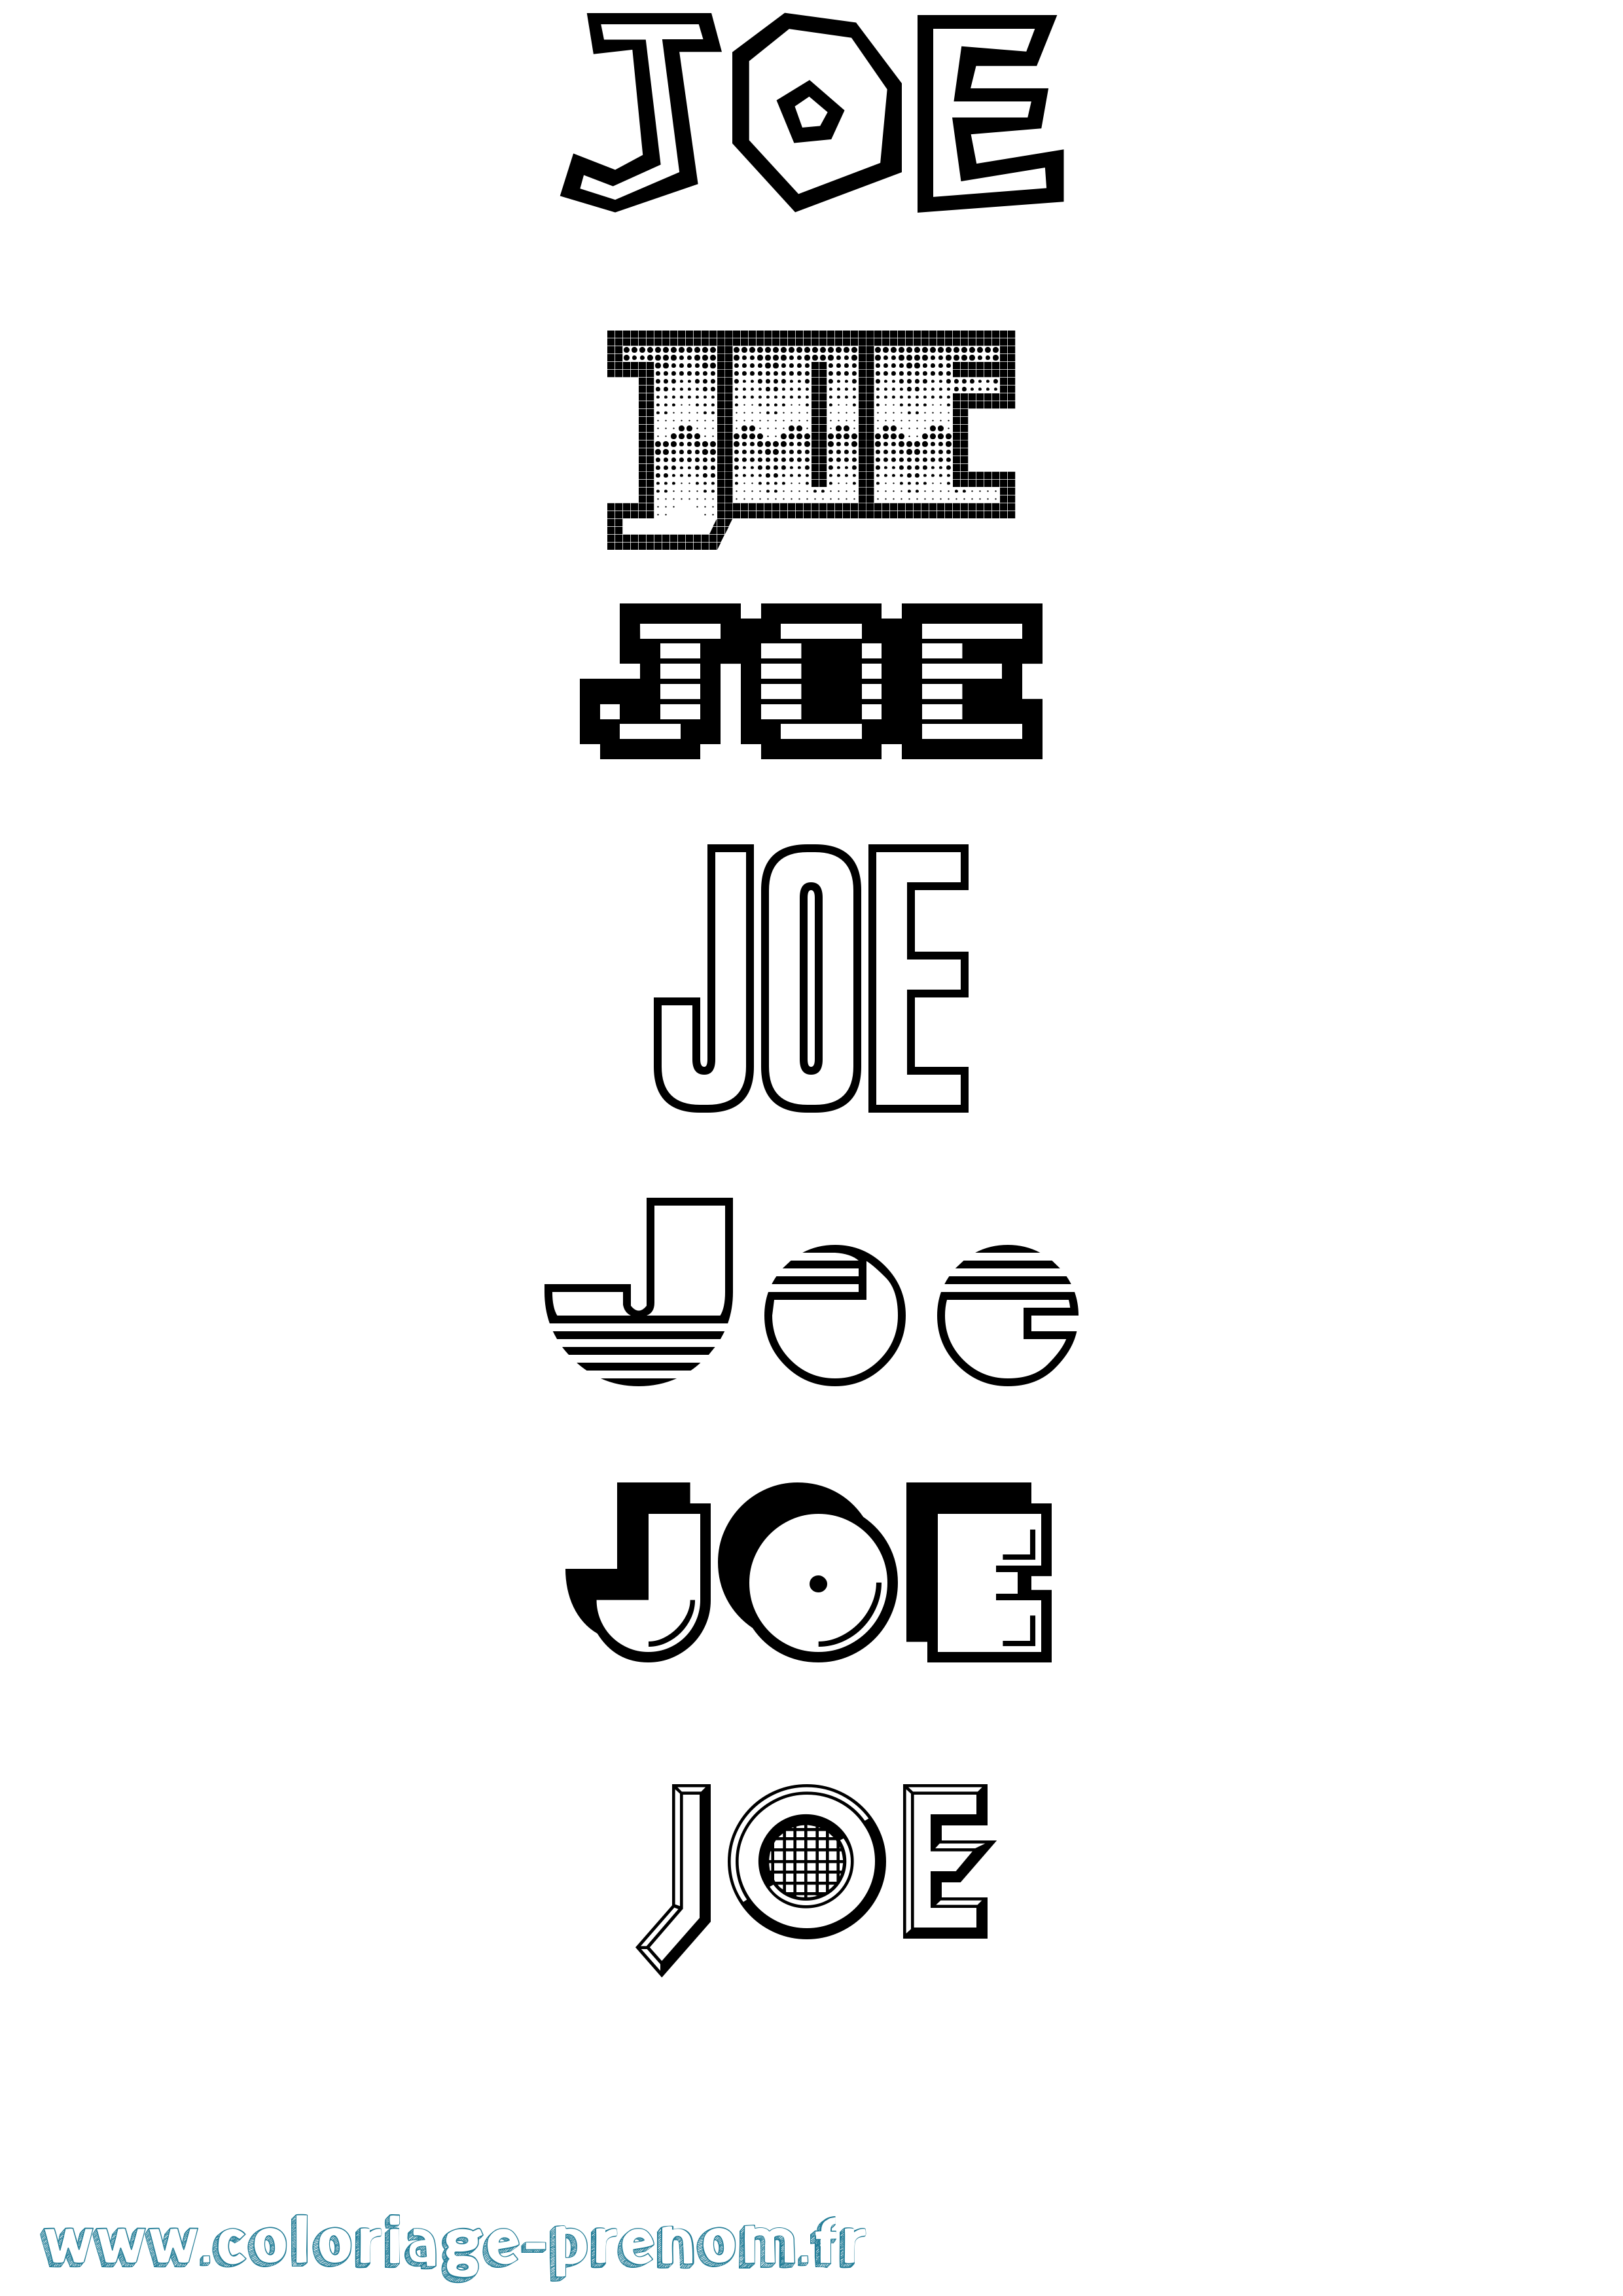 Coloriage prénom Joe Jeux Vidéos